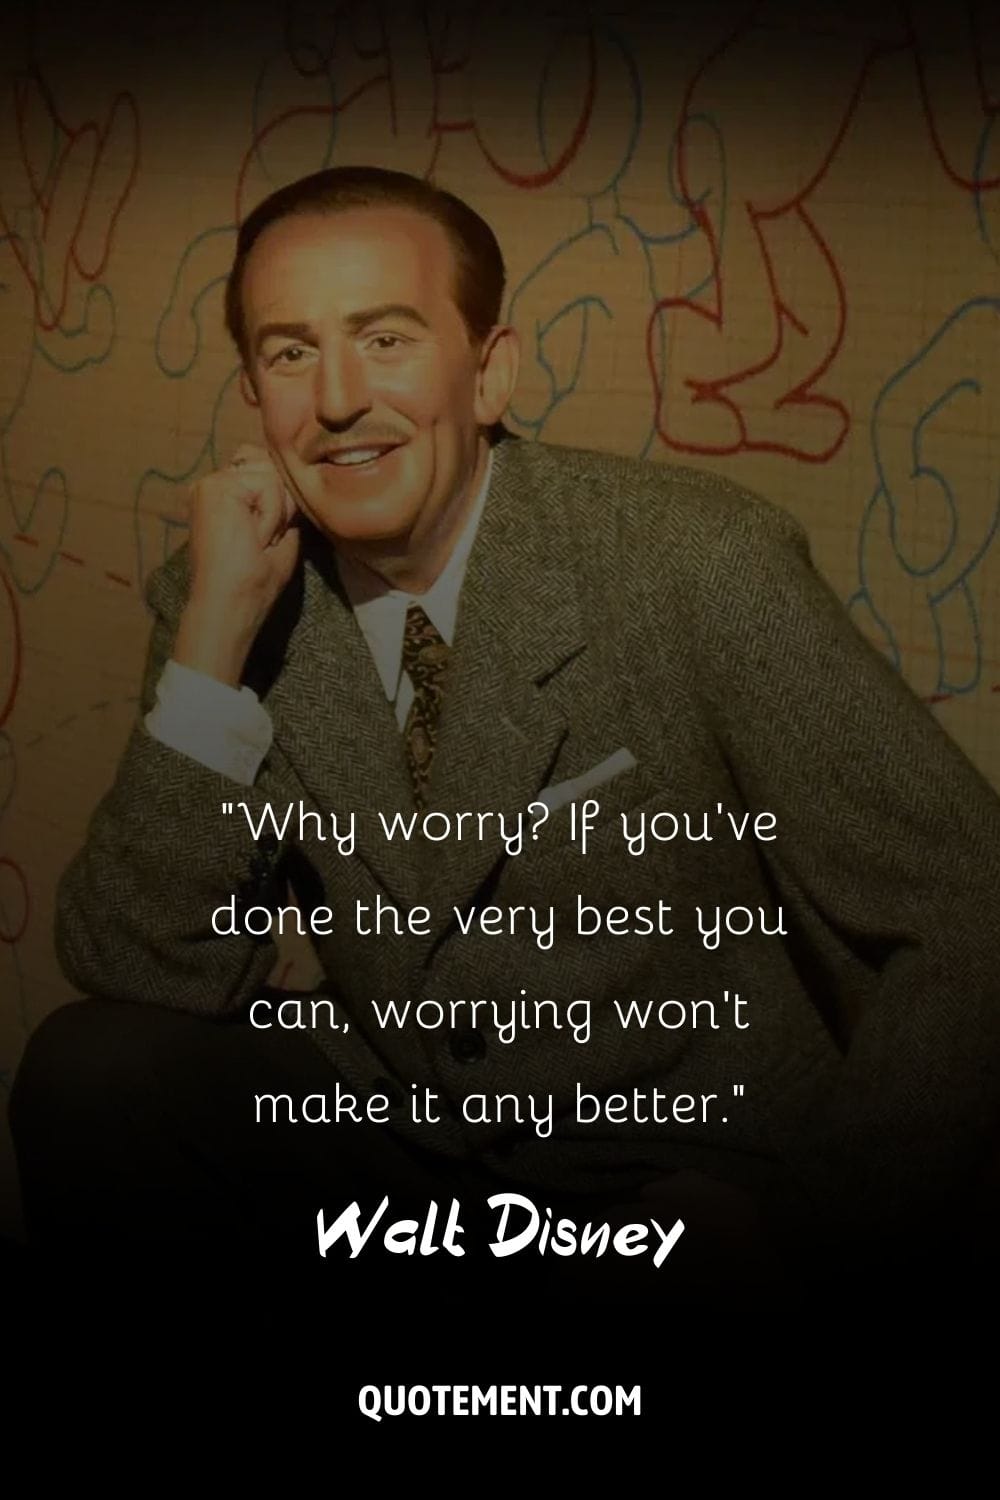 Image of Walt Disney representing Walt Disney inspirational quote.